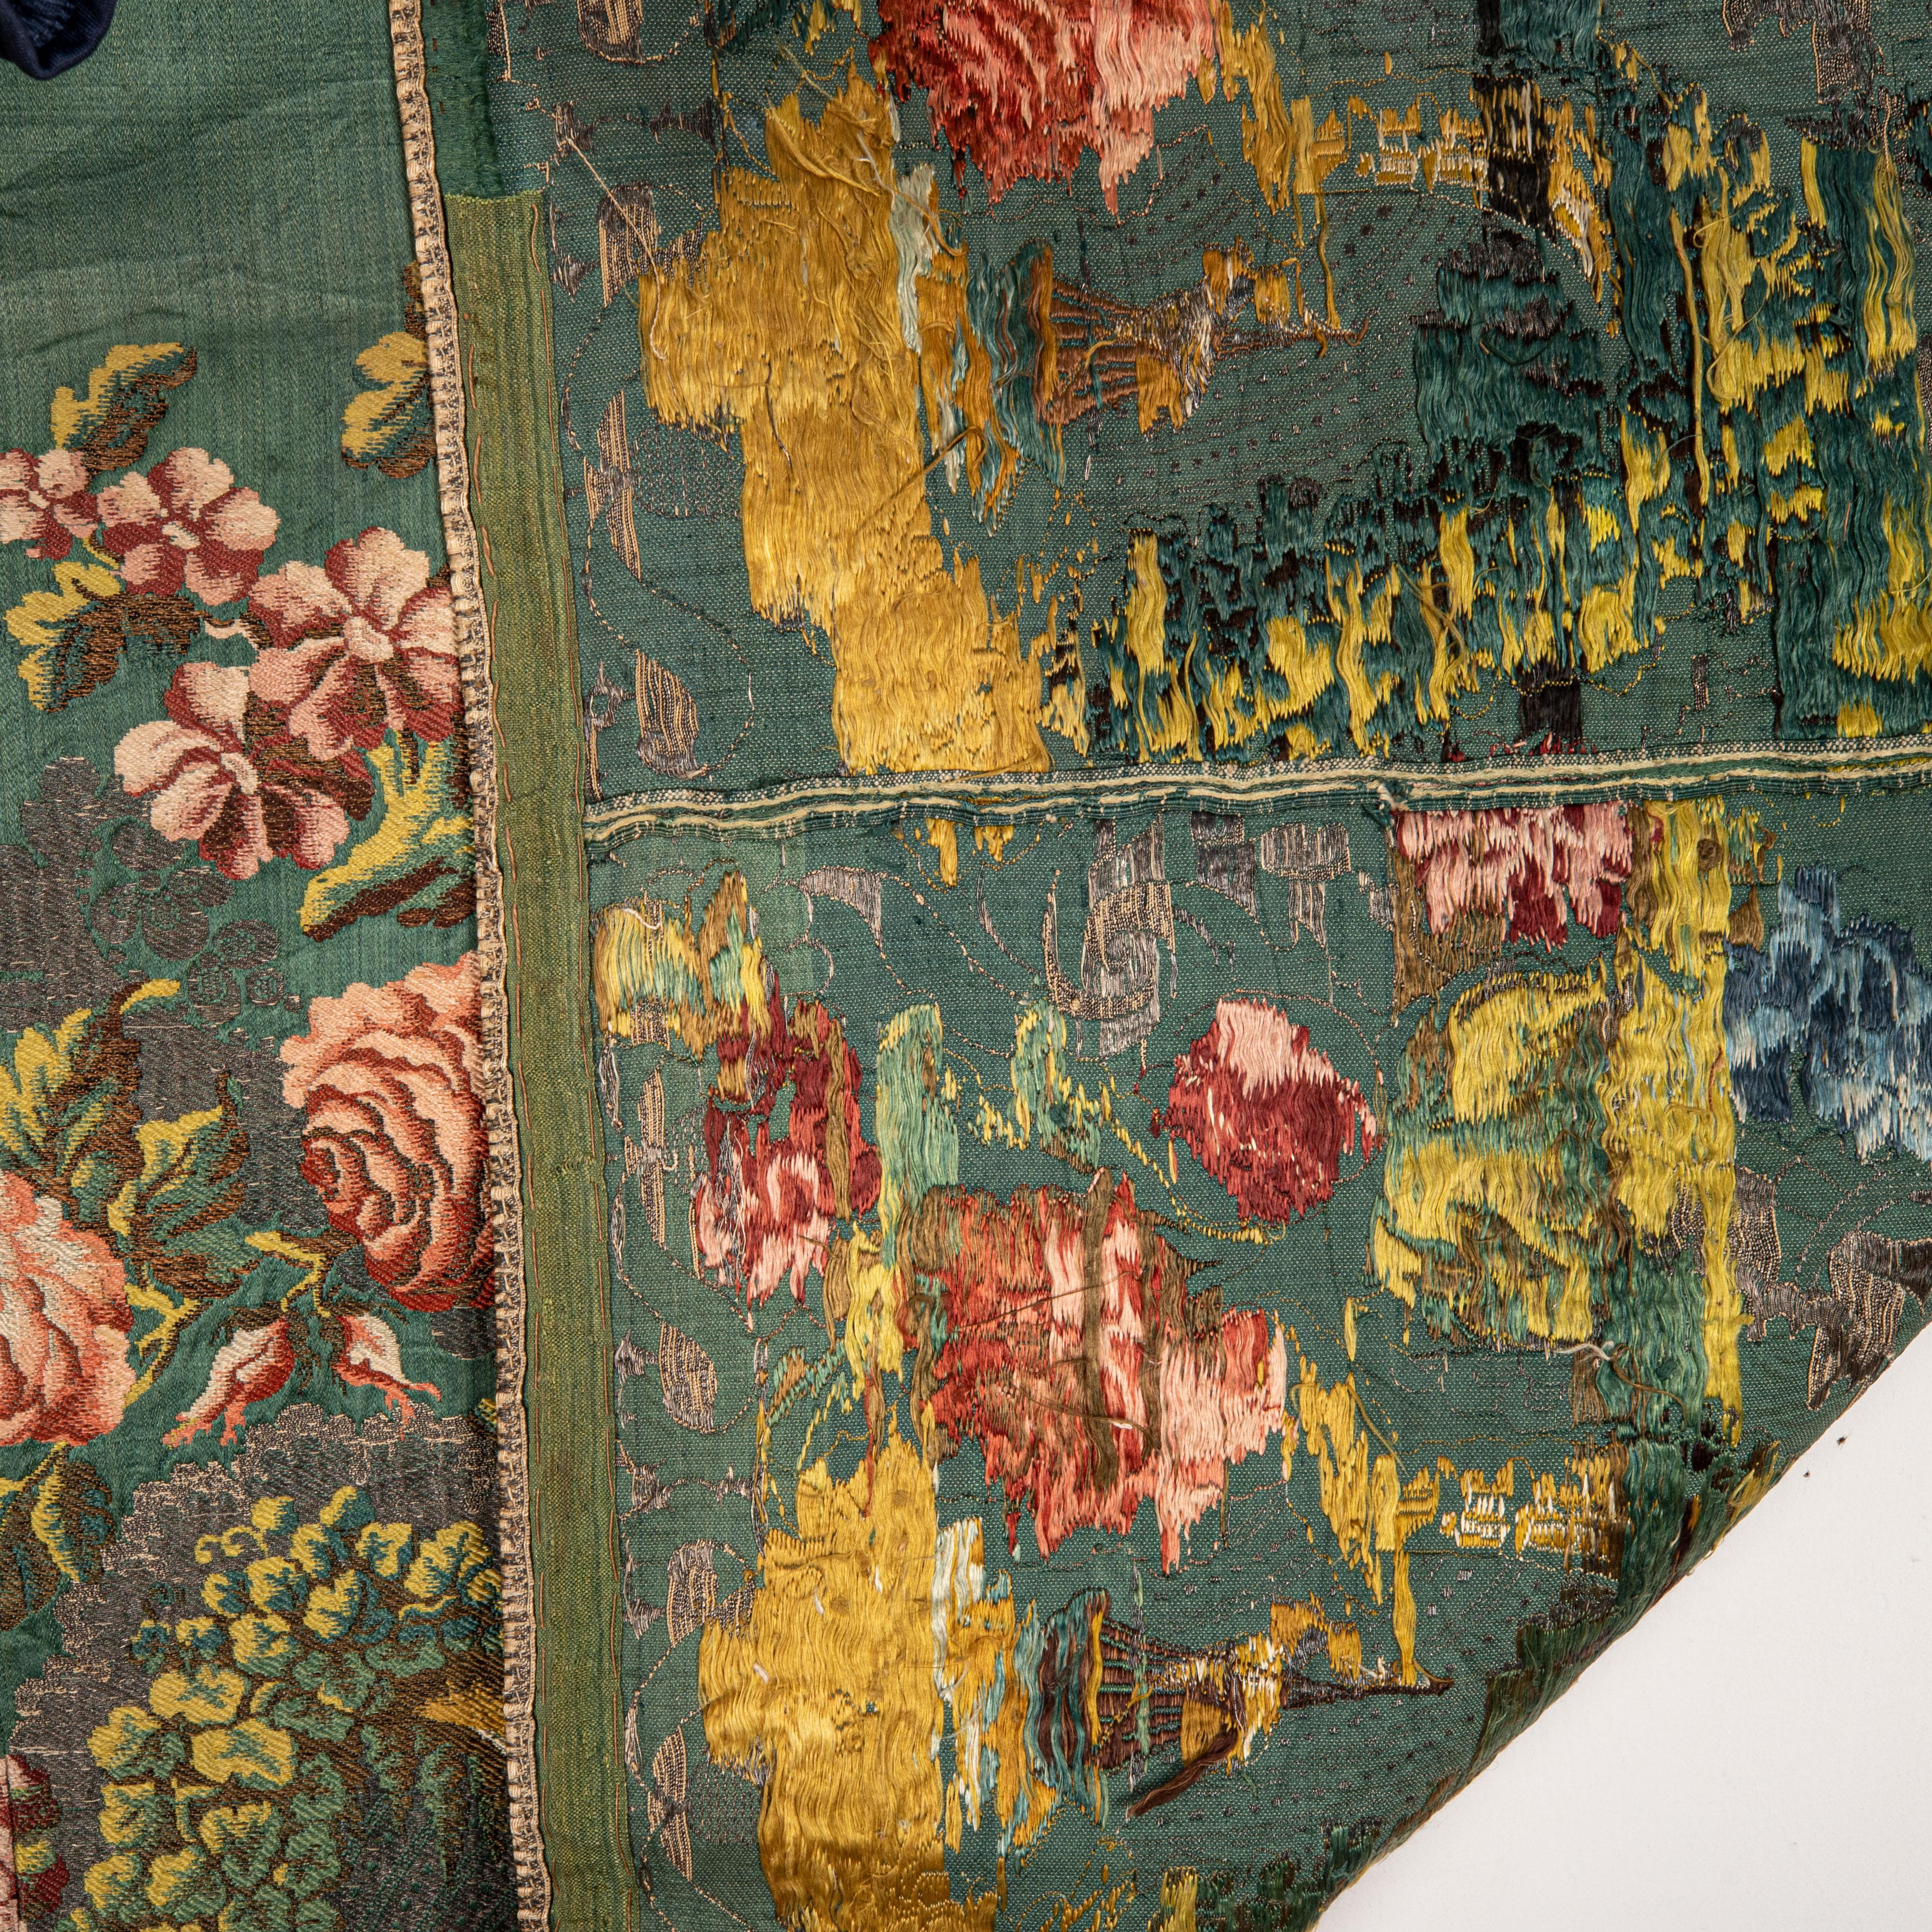 European Silk and Metallic Thread Brocaded Textile, 18th C. For Sale 2